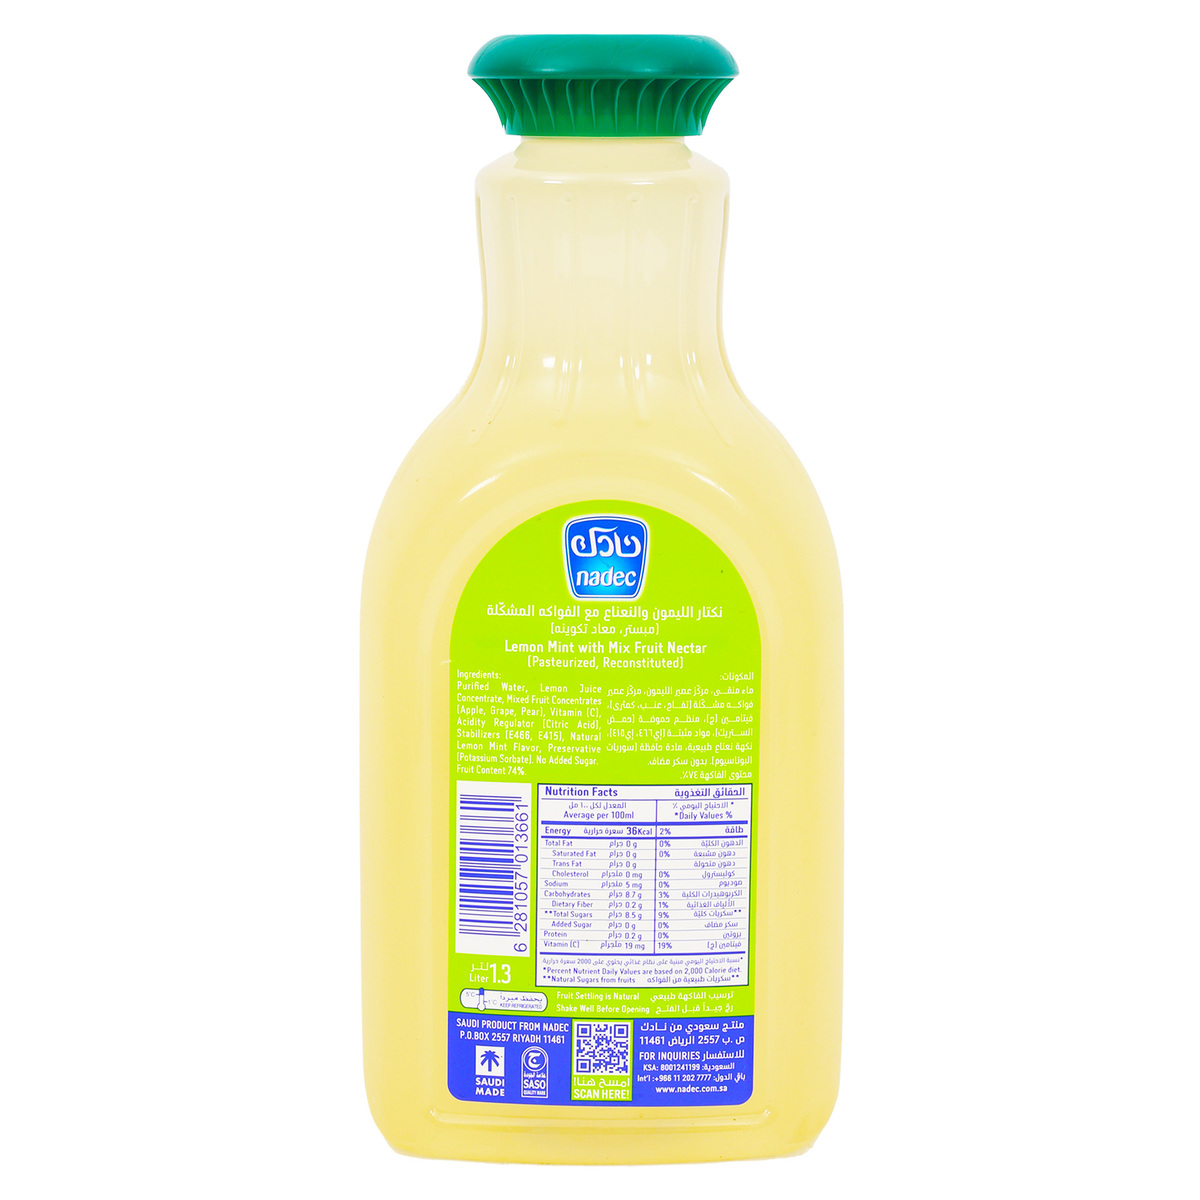 Nadec No Added Sugar Lemon Mint With Mix Fruit Juice 1.3 Litres